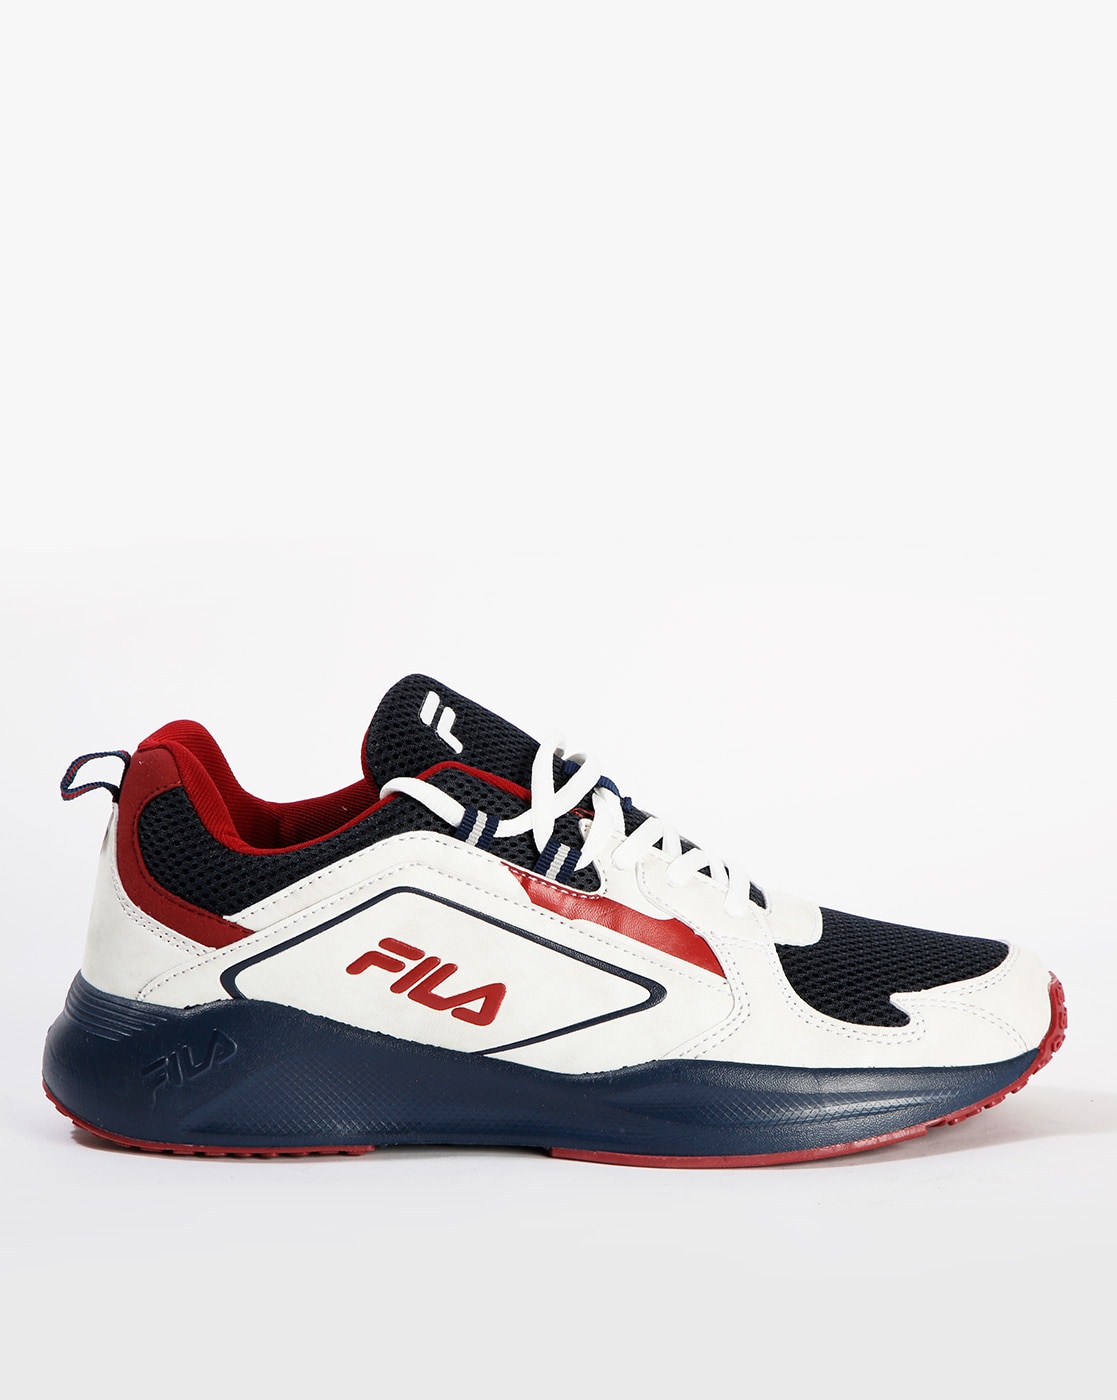 fila latest sports shoes